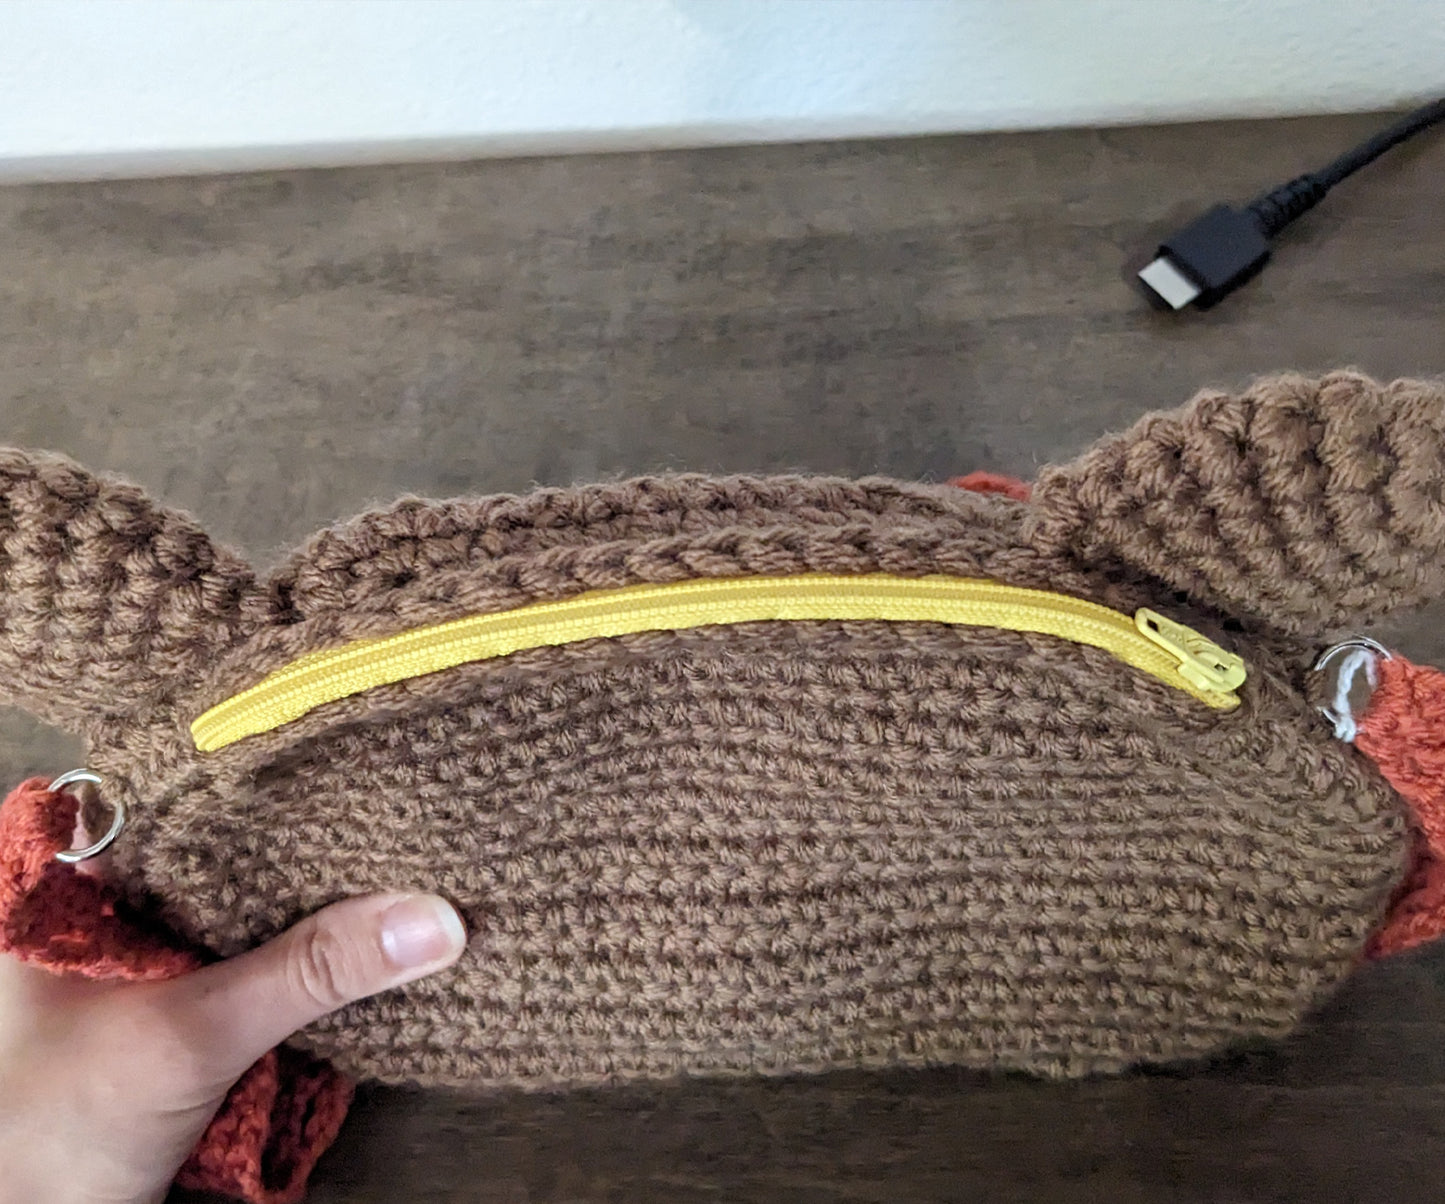 Sweet Bear Crossbody Bag - Hand crocheted purse